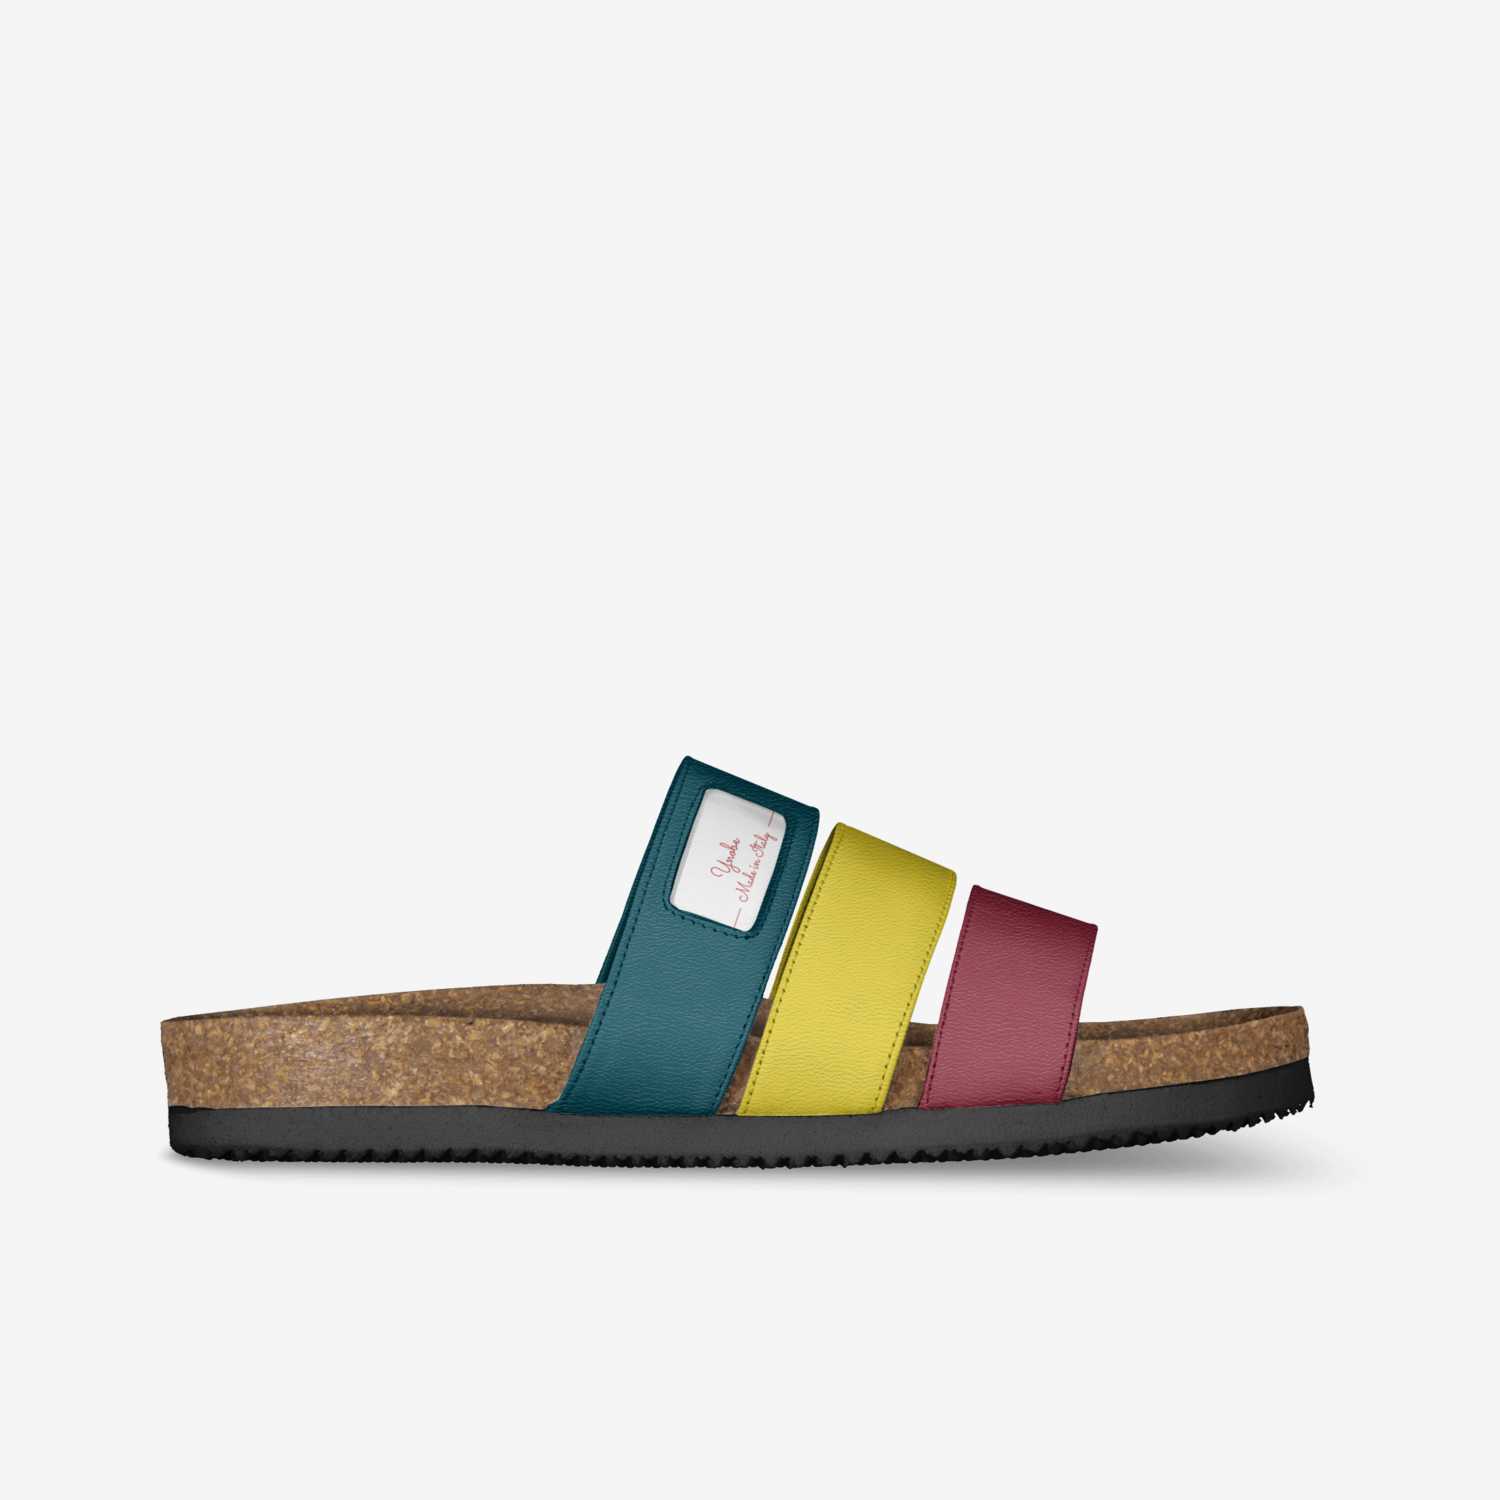 Ynobe | A Custom Shoe concept by Ebony Broady